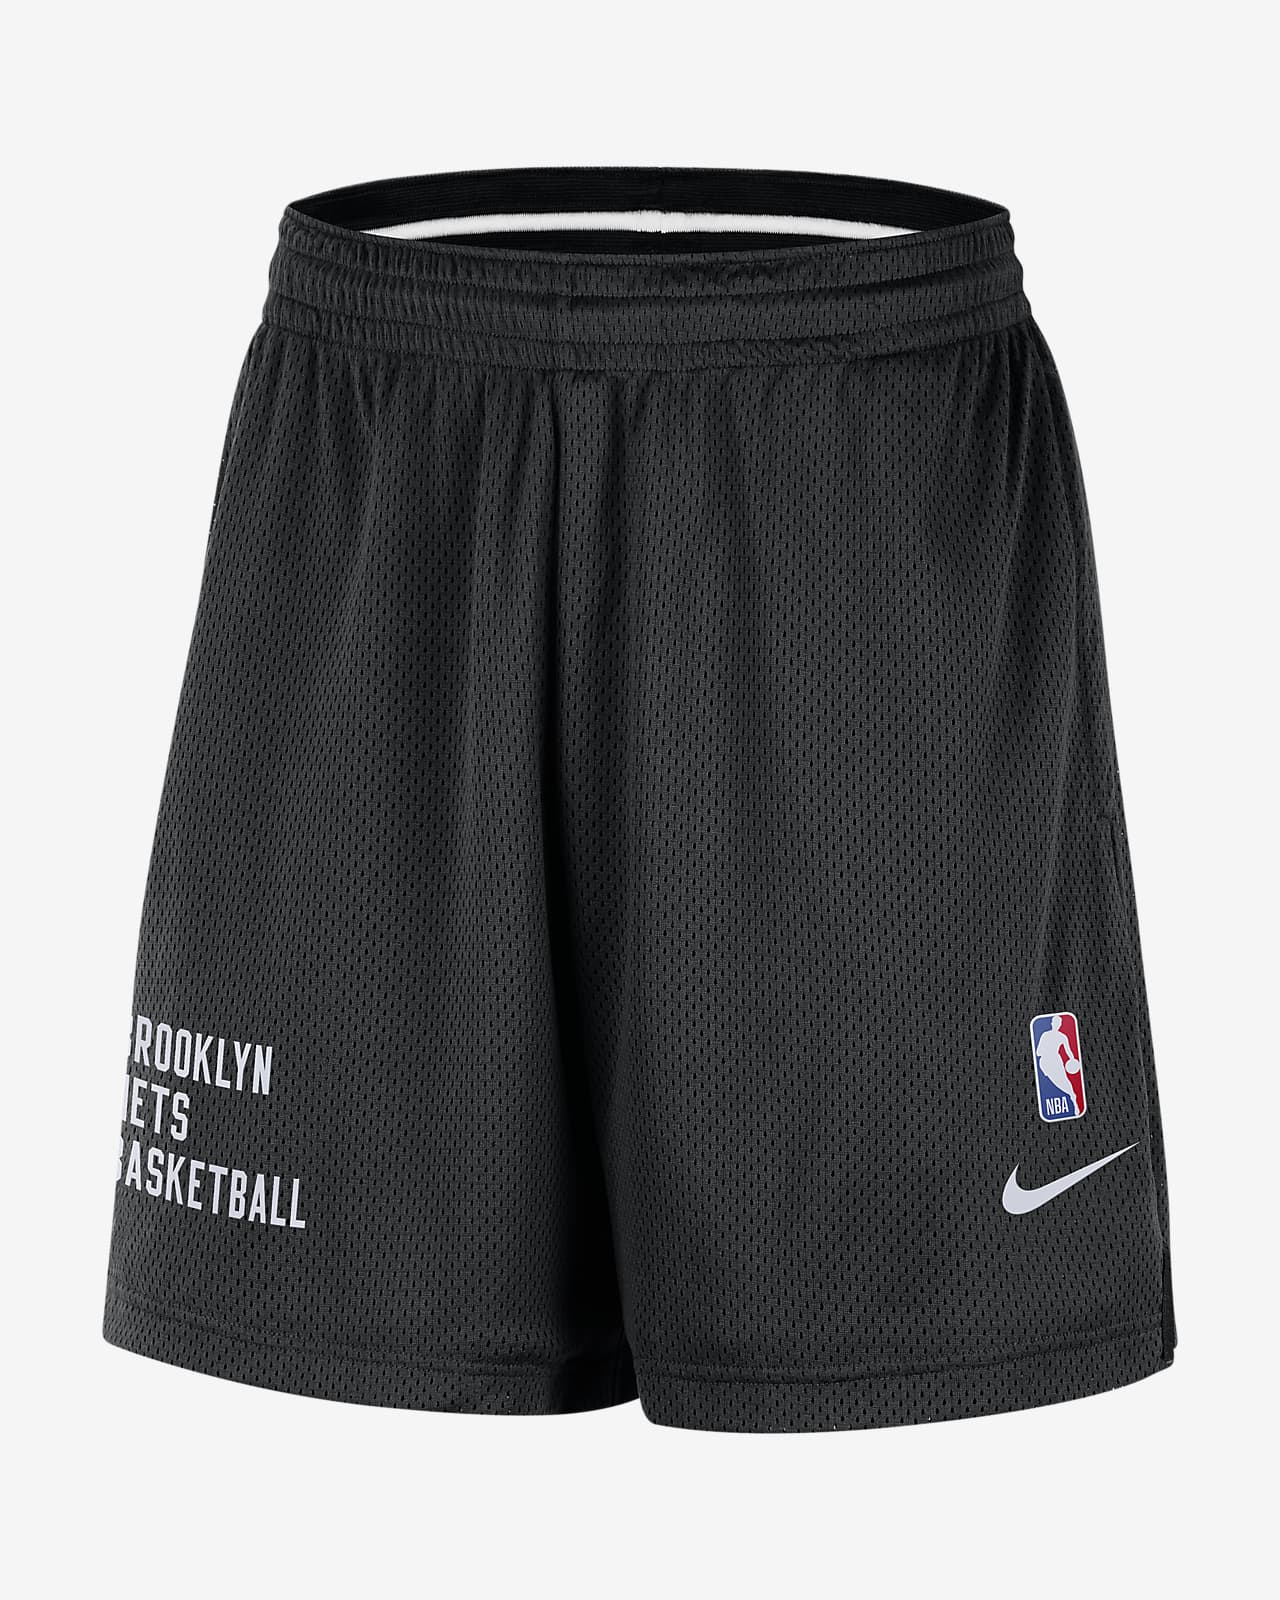 NBA Brooklyn Nets Basketball Shorts nike dry medium